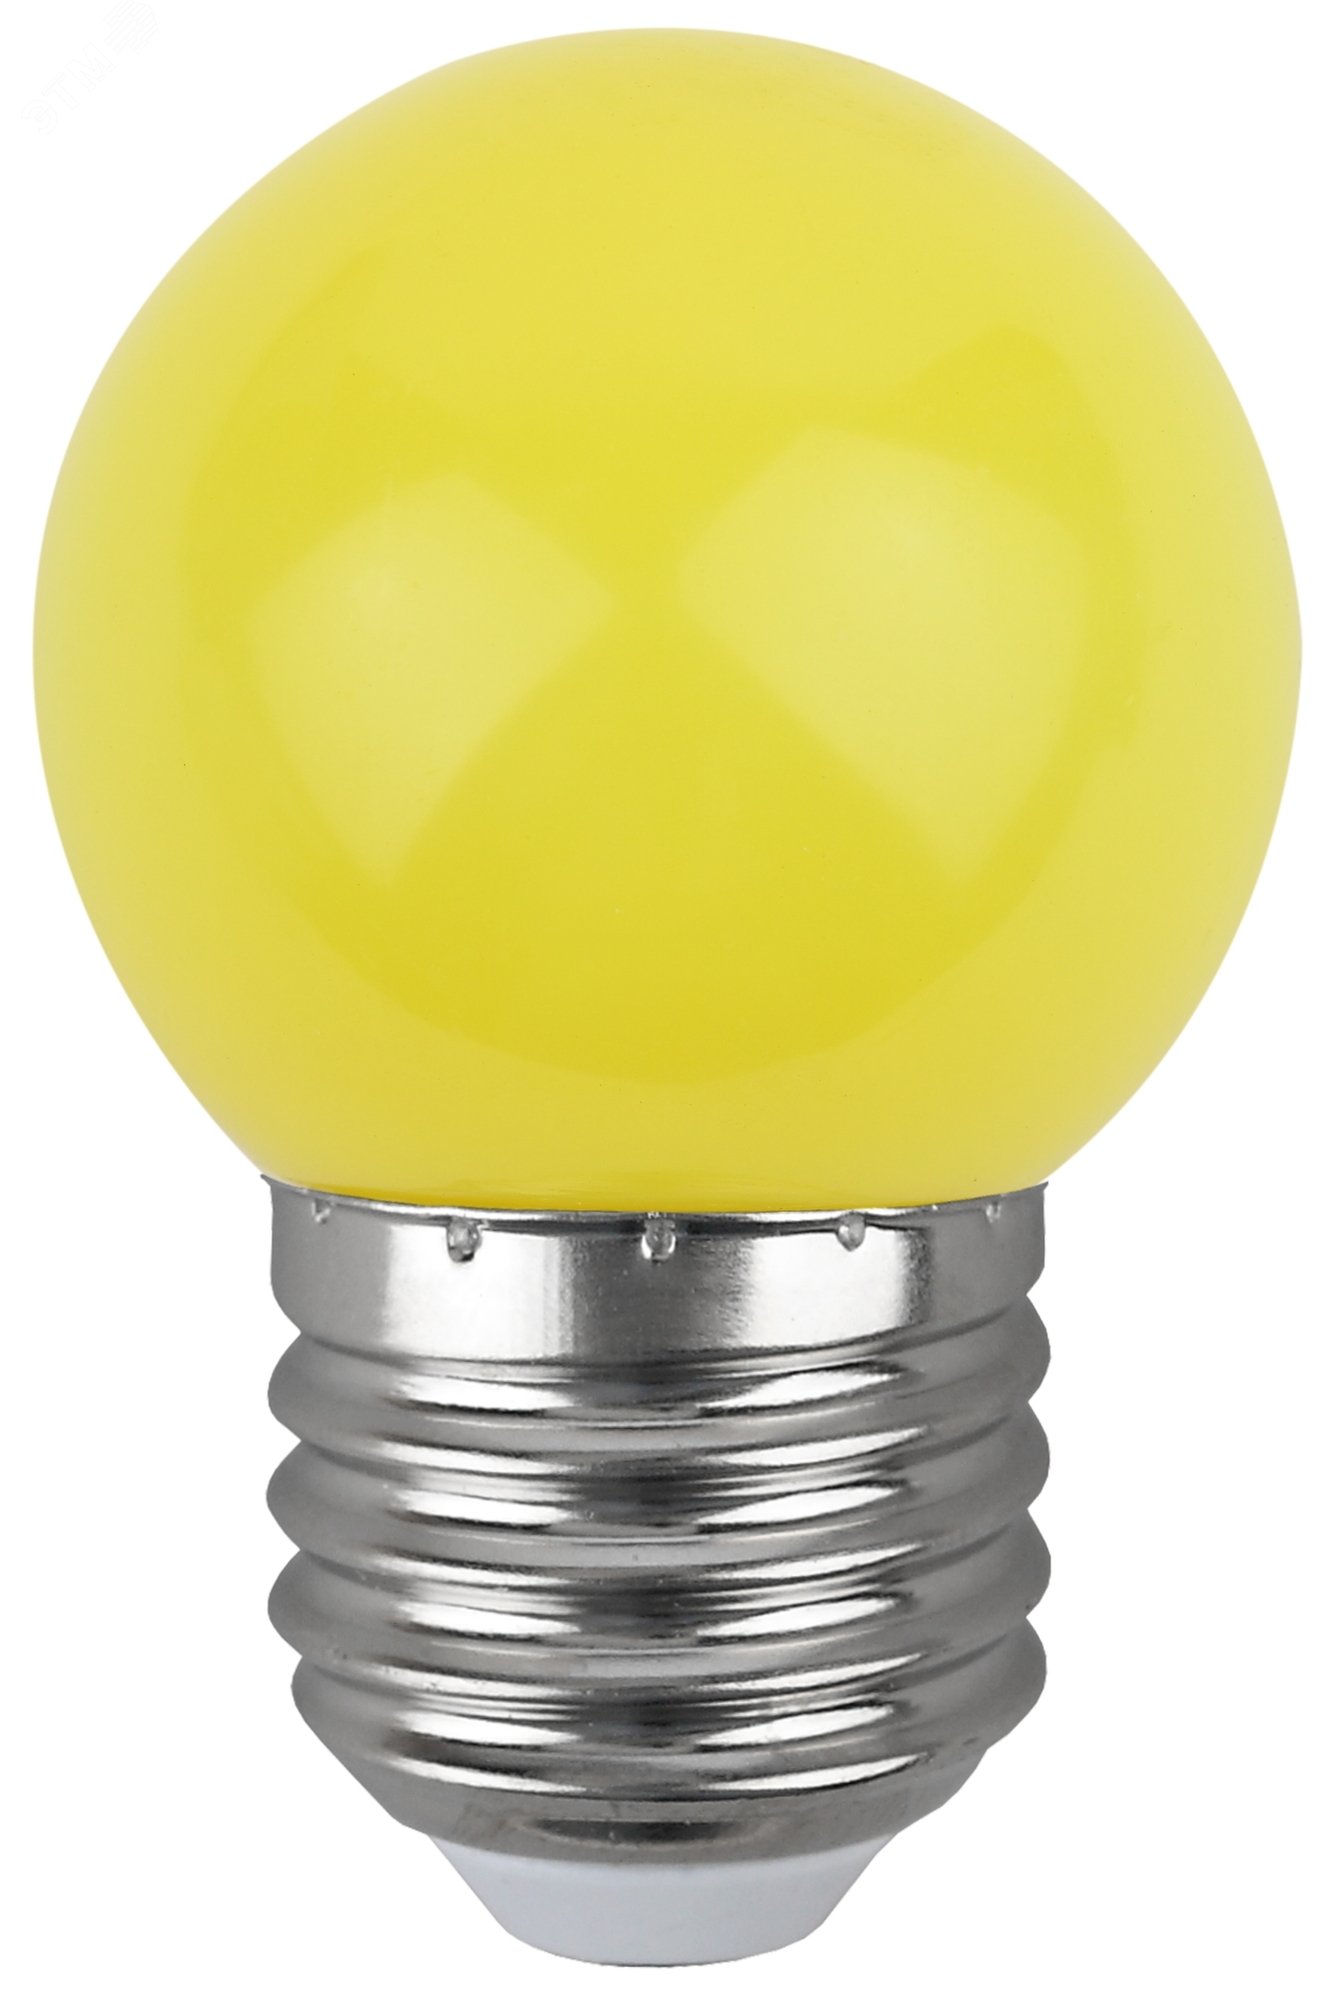 Лампа светодиодная для Белт-Лайт диод. шар, желт., 4SMD, 1W, E27 ERAYL45-E27 LED Р45-1W-E27 Б0049576 ЭРА - превью 3